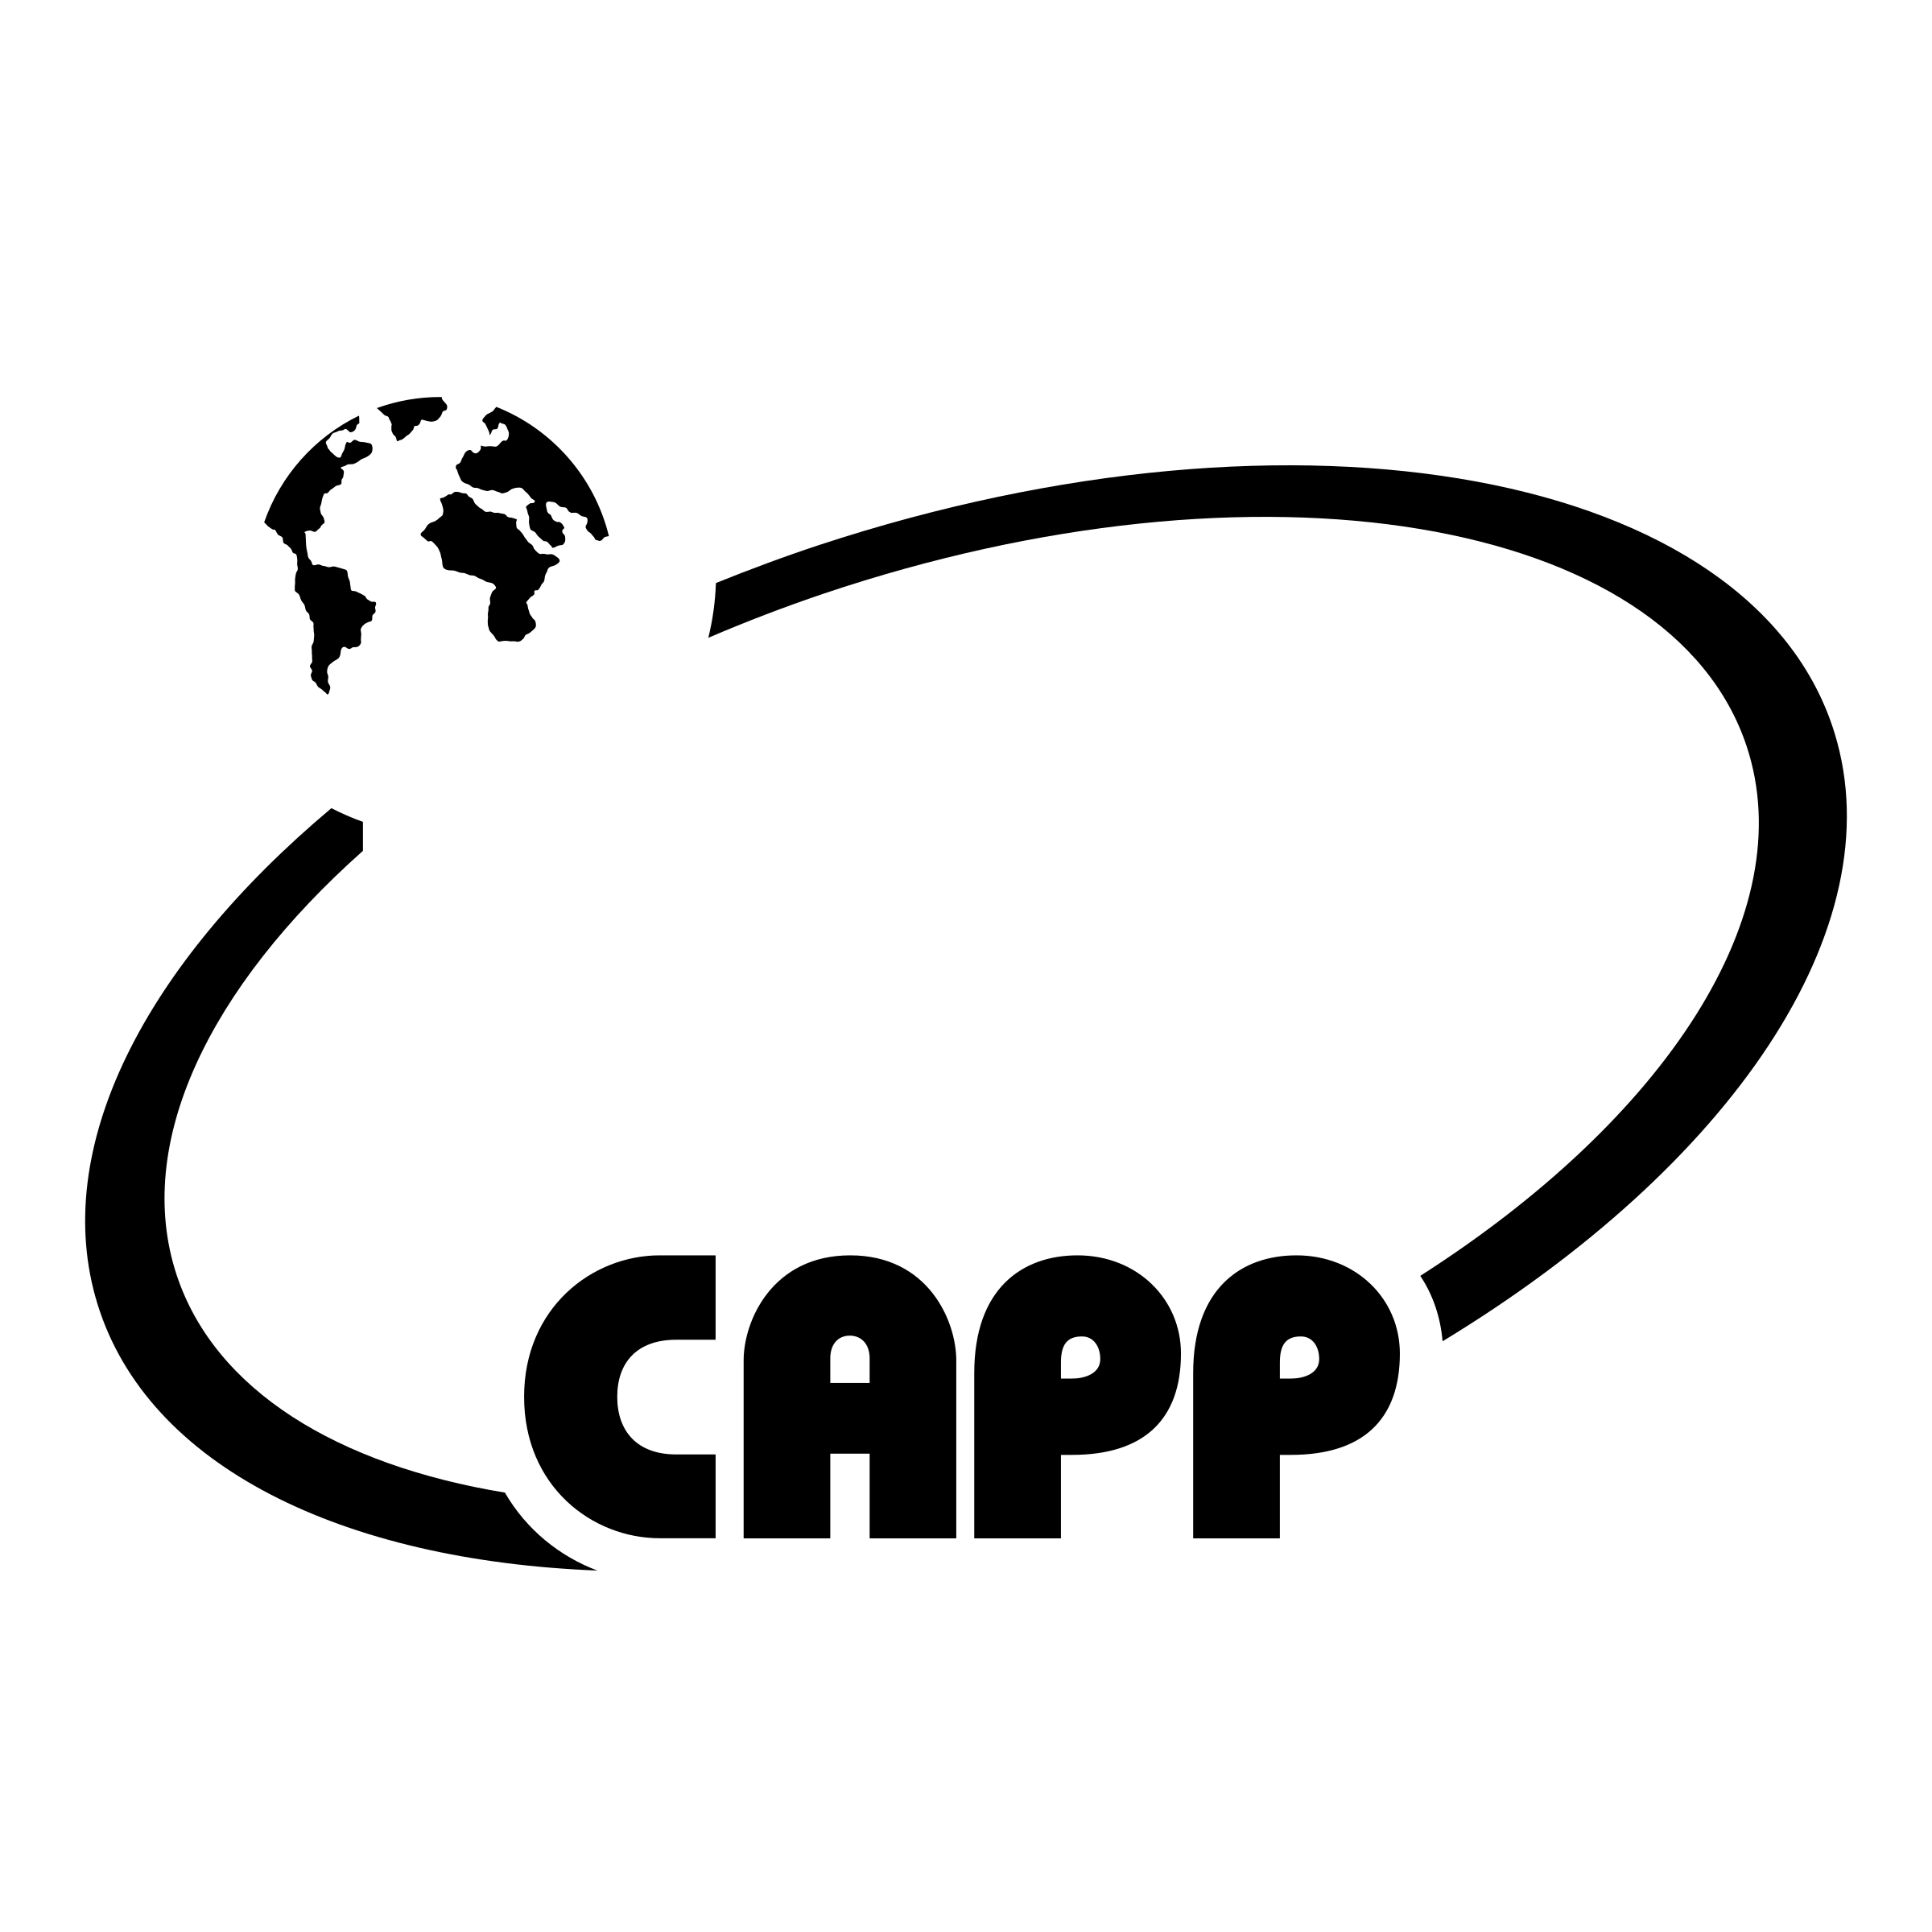 Iapp Logo - IAPP CAPP Logo PNG Transparent & SVG Vector - Freebie Supply